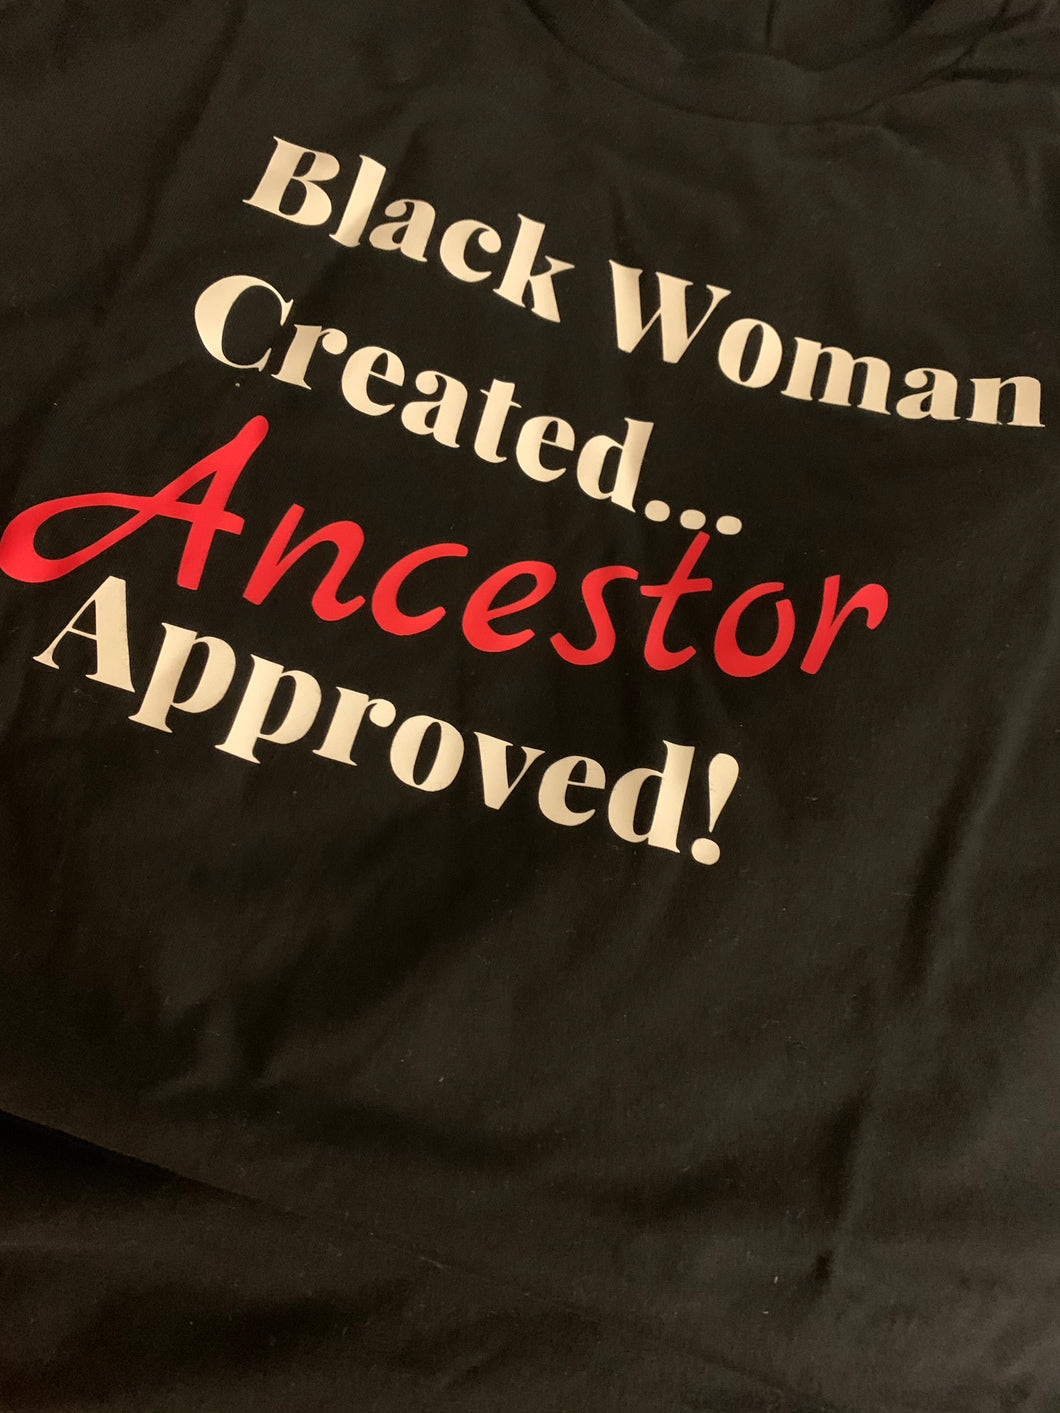 Black Woman Created Ancestor Approved Sweatshirt